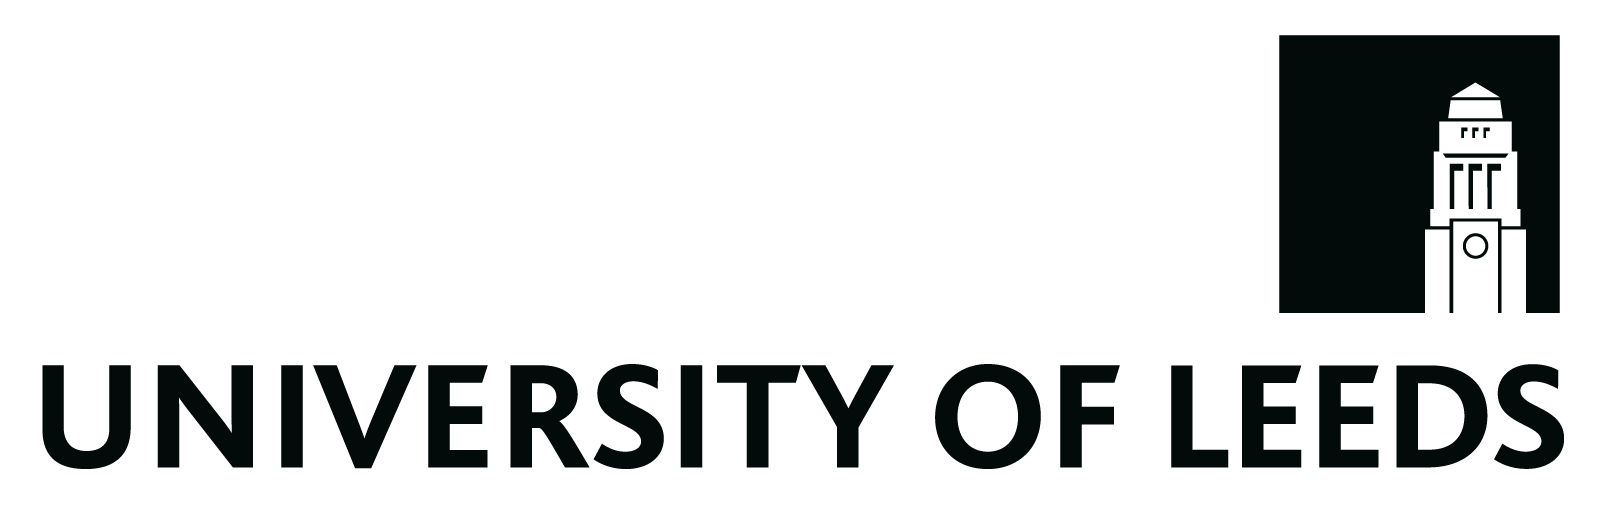 Transparent University of Leeds logo